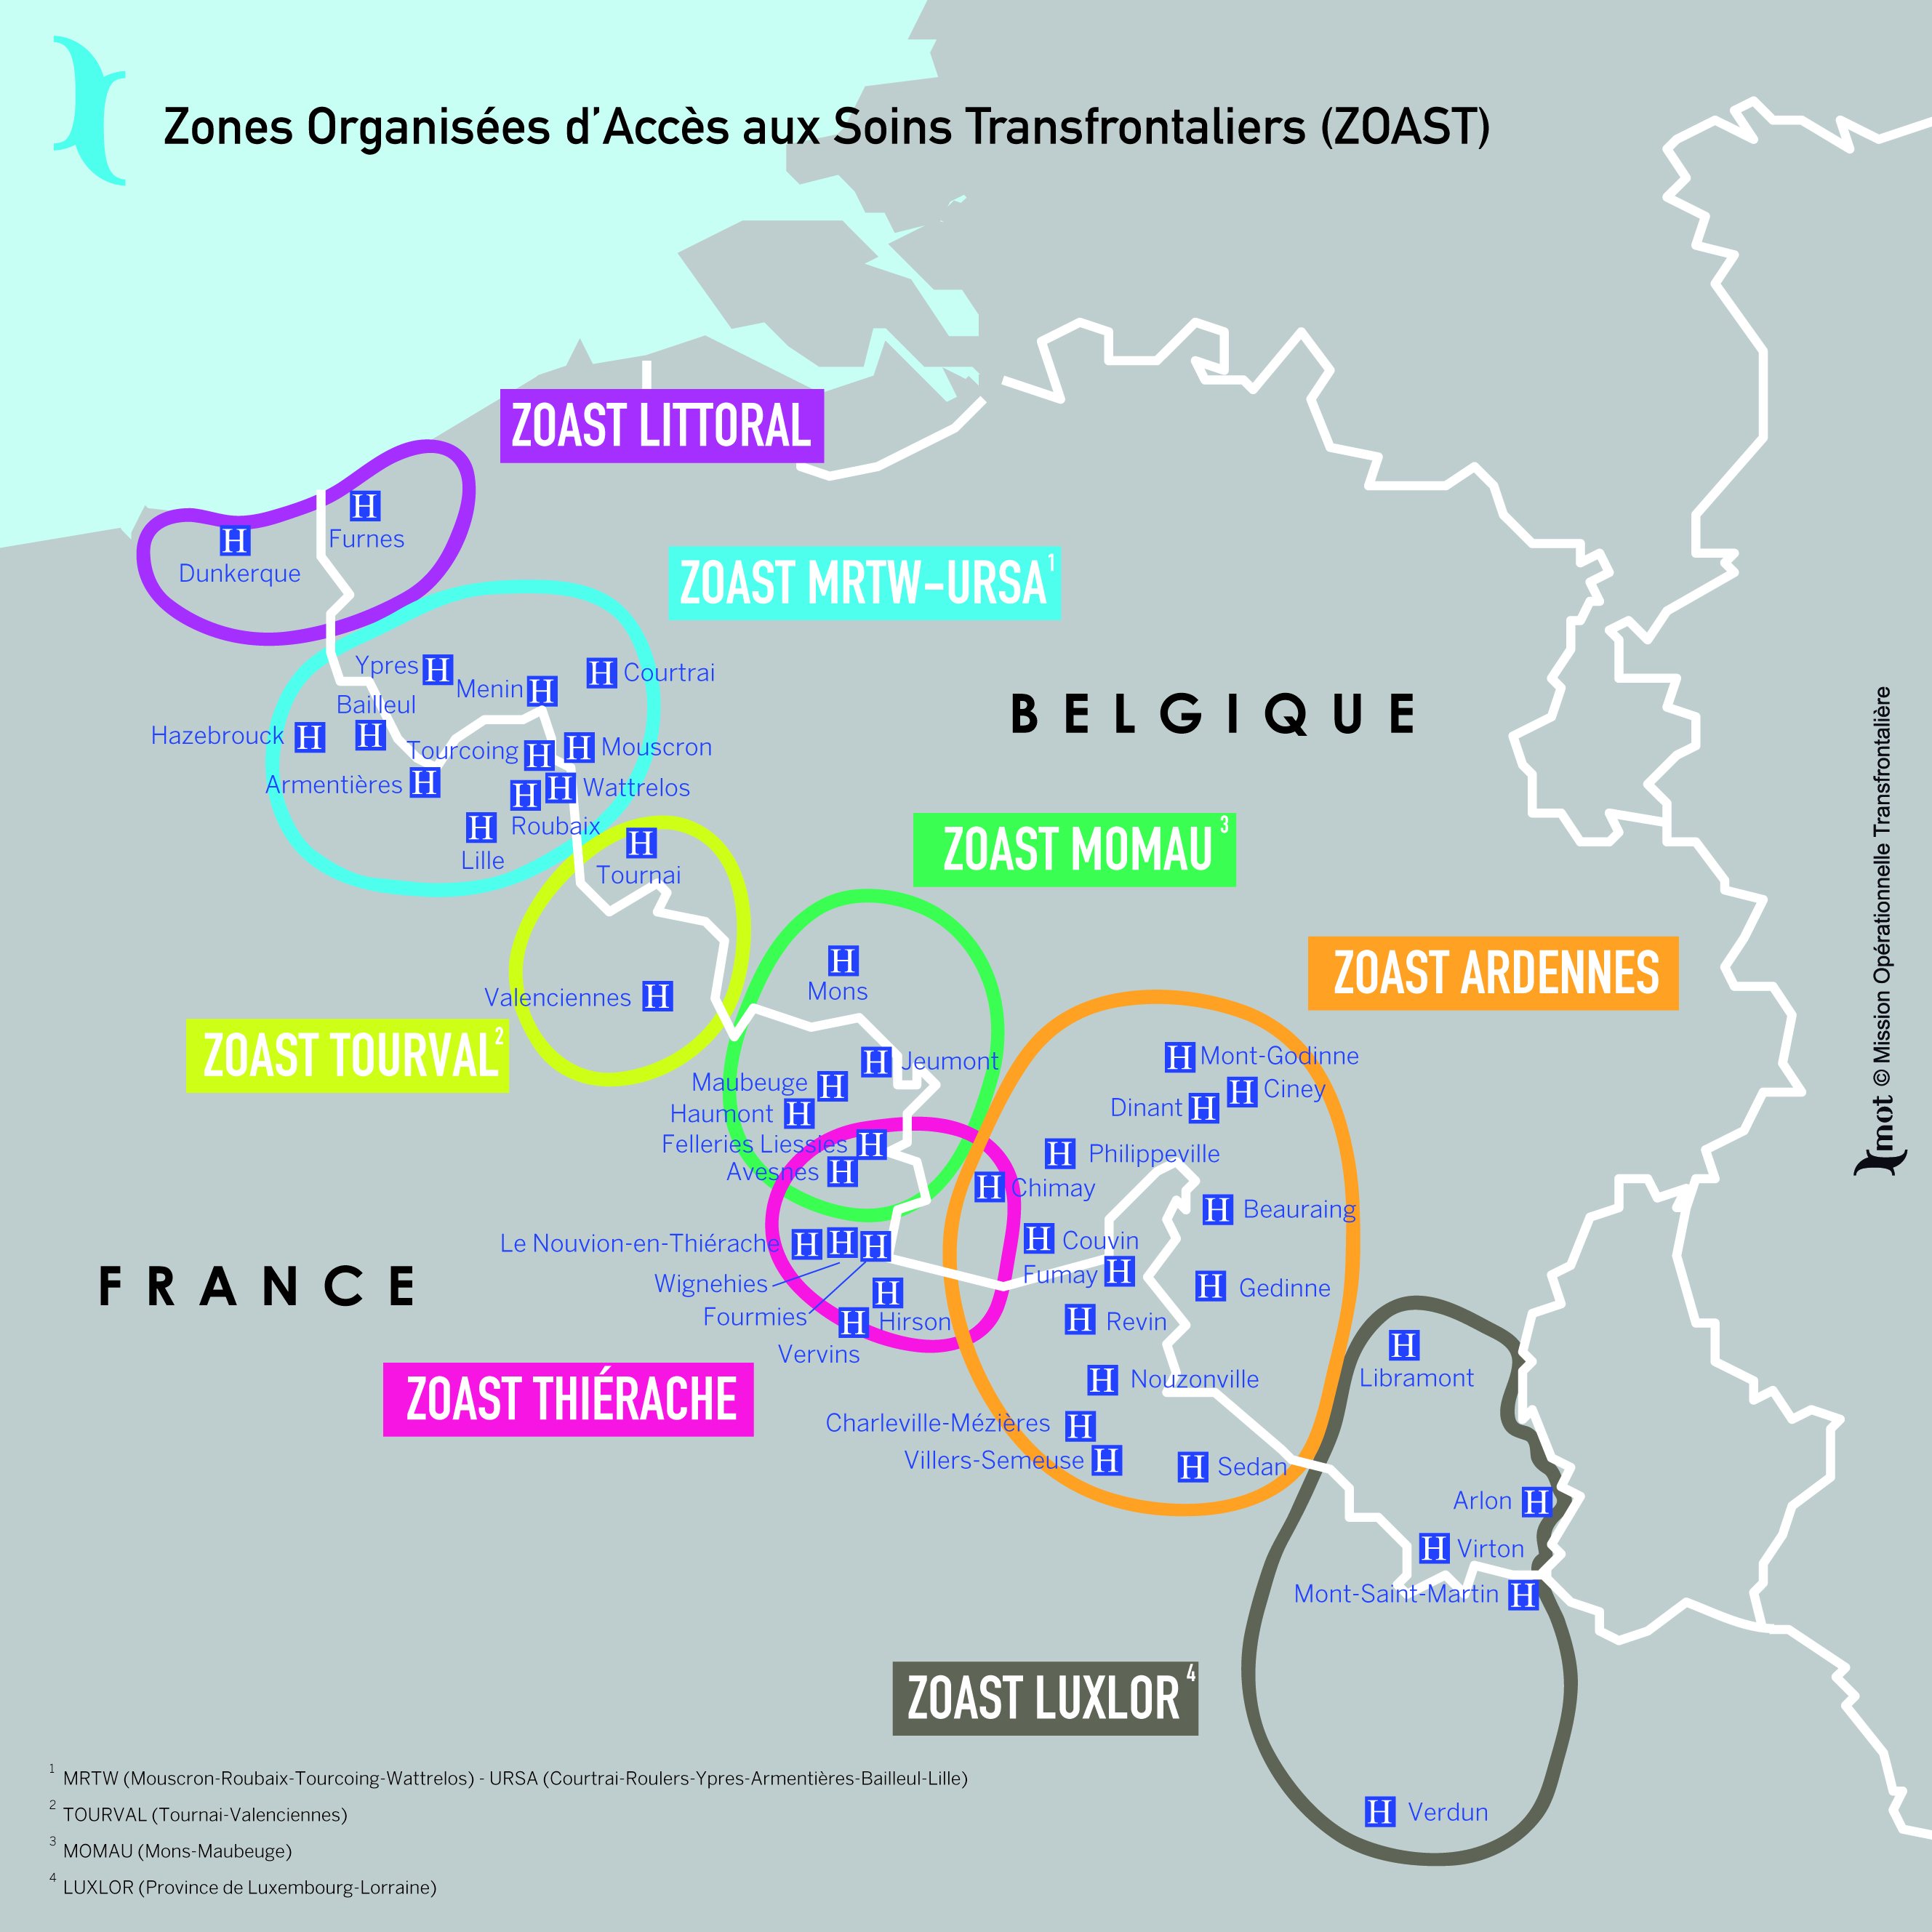 Zoasts Seven Zones Of Organised Access To Cross Border Healthcare Futurium European Commission